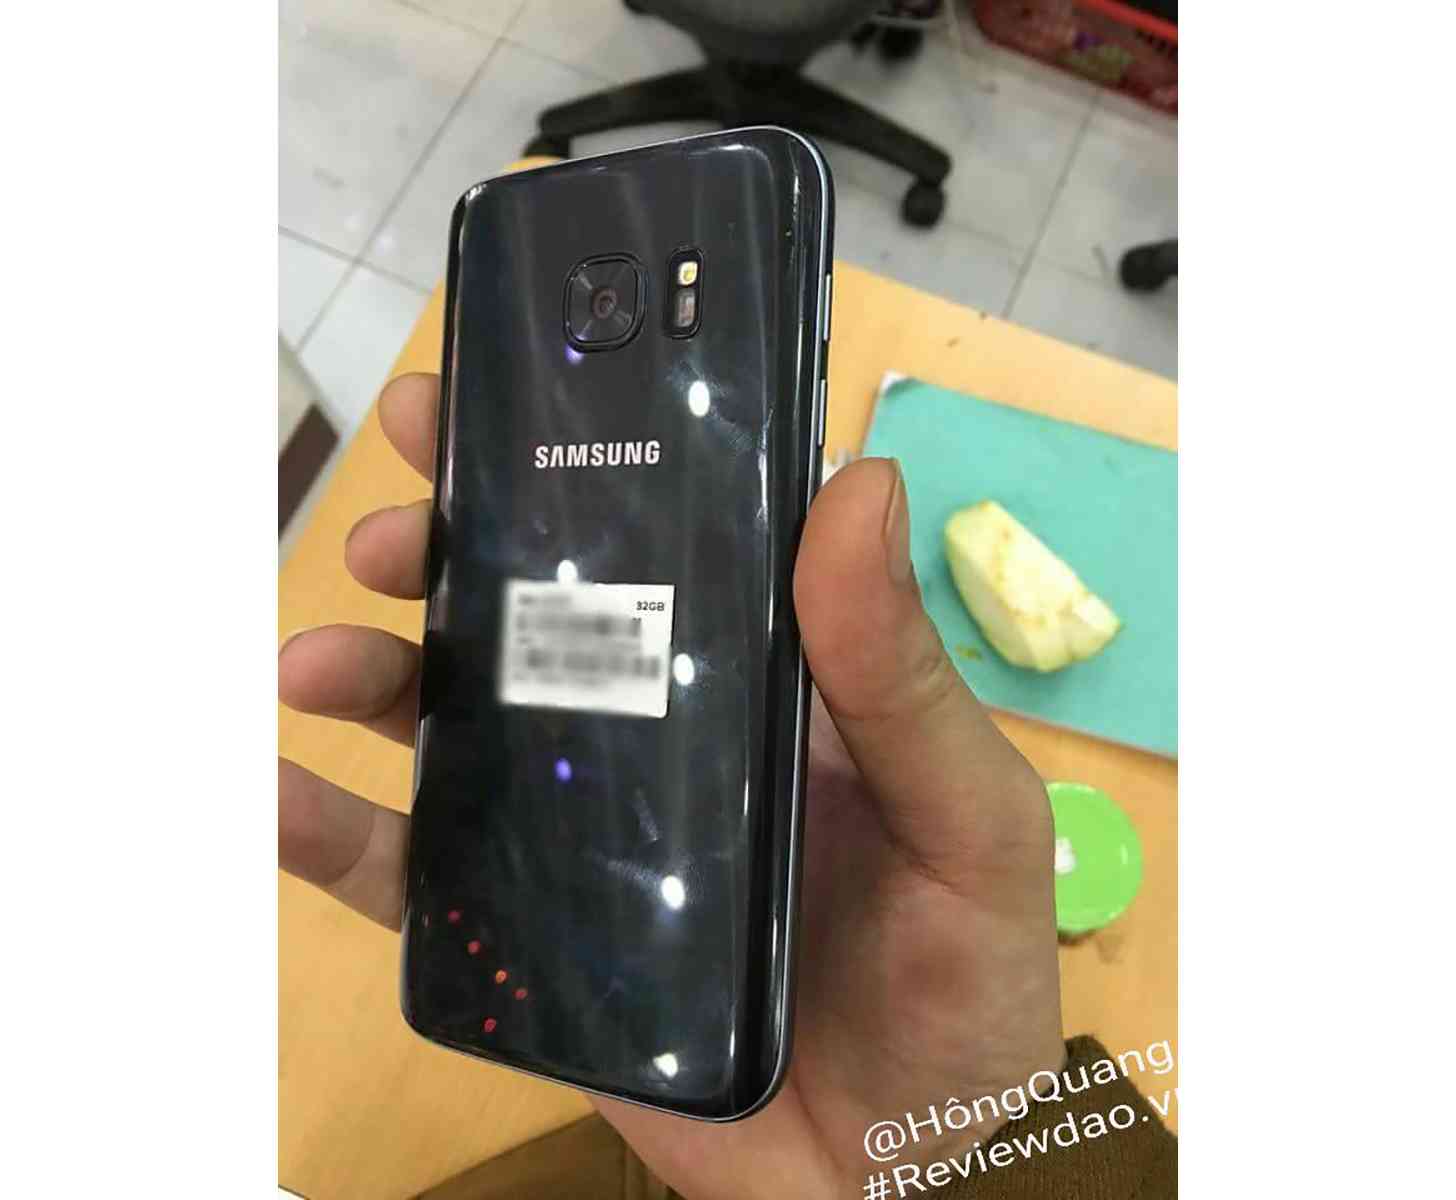 Samsung Galaxy S7 photo leak